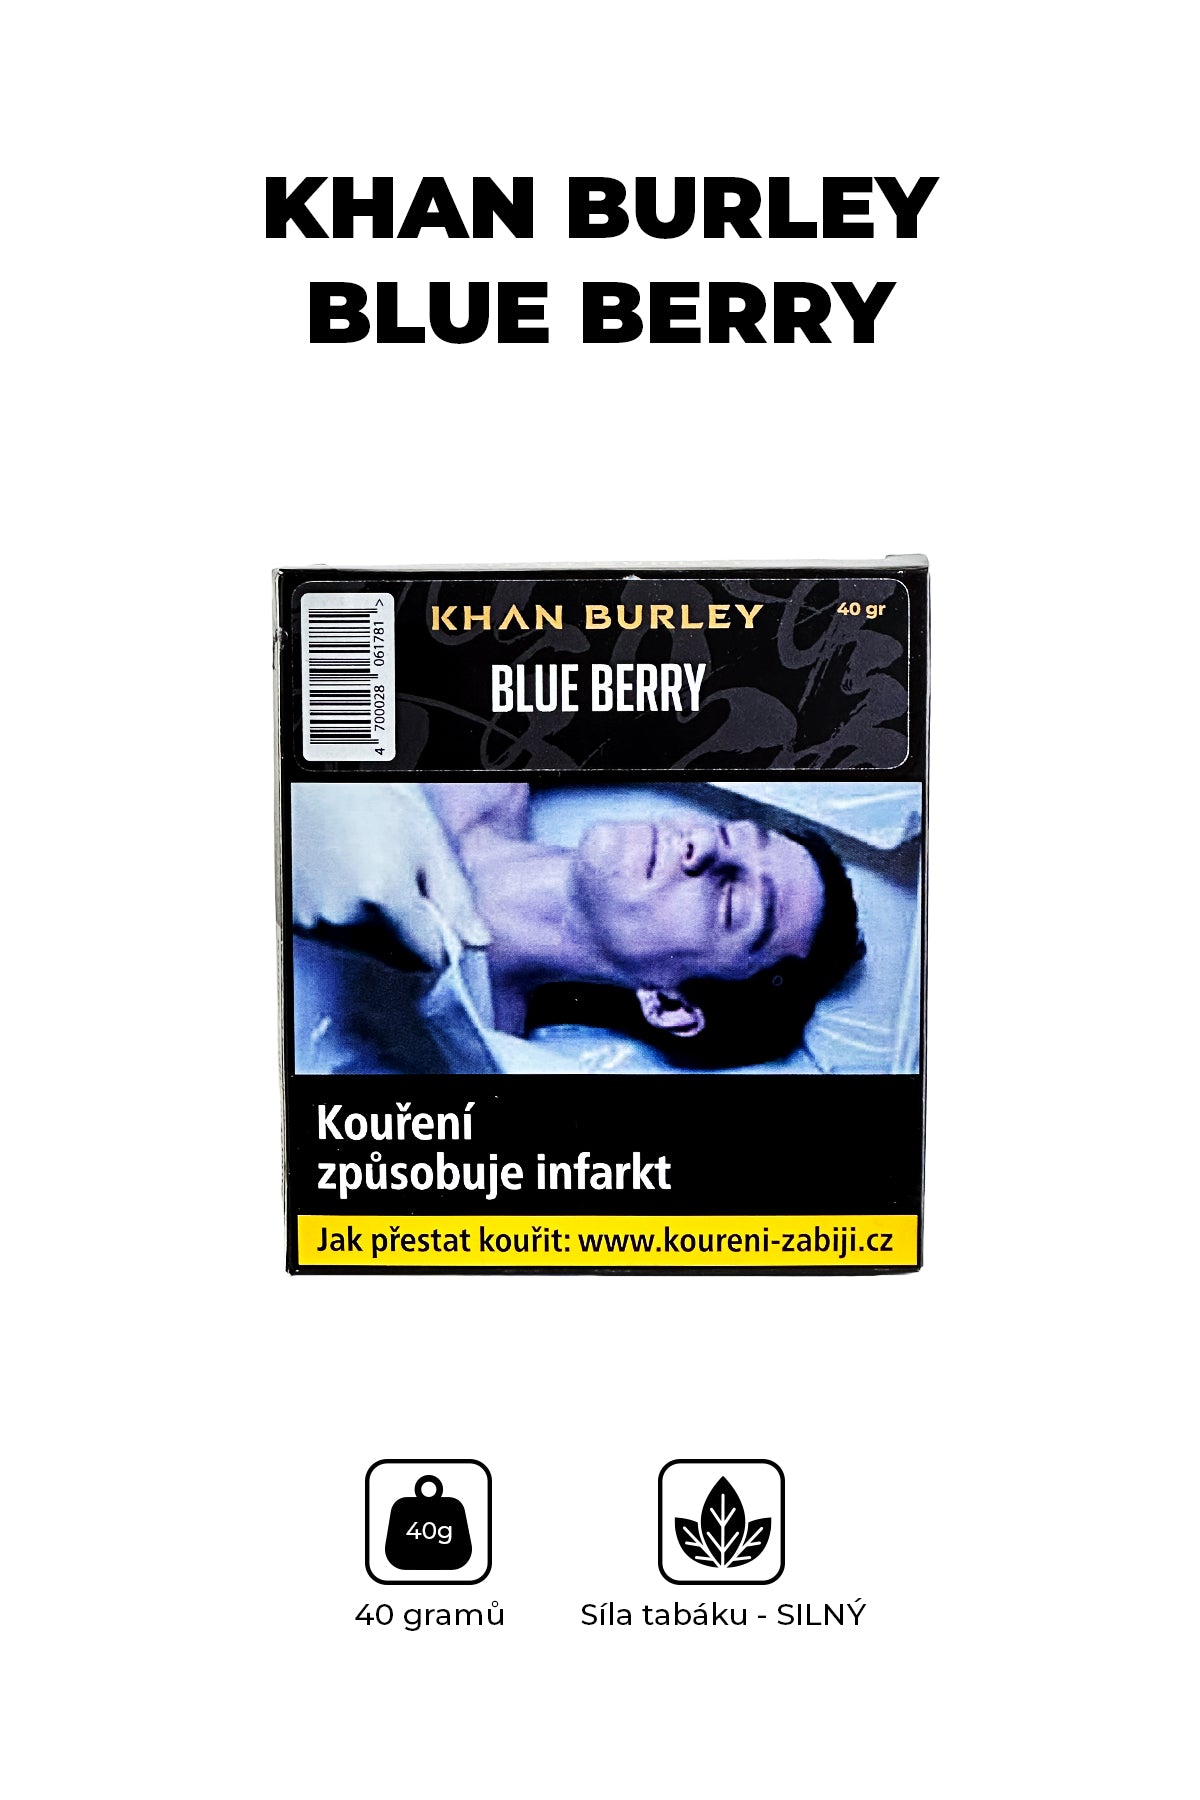 Tabák - Khan Burley 40g - Blue Berry